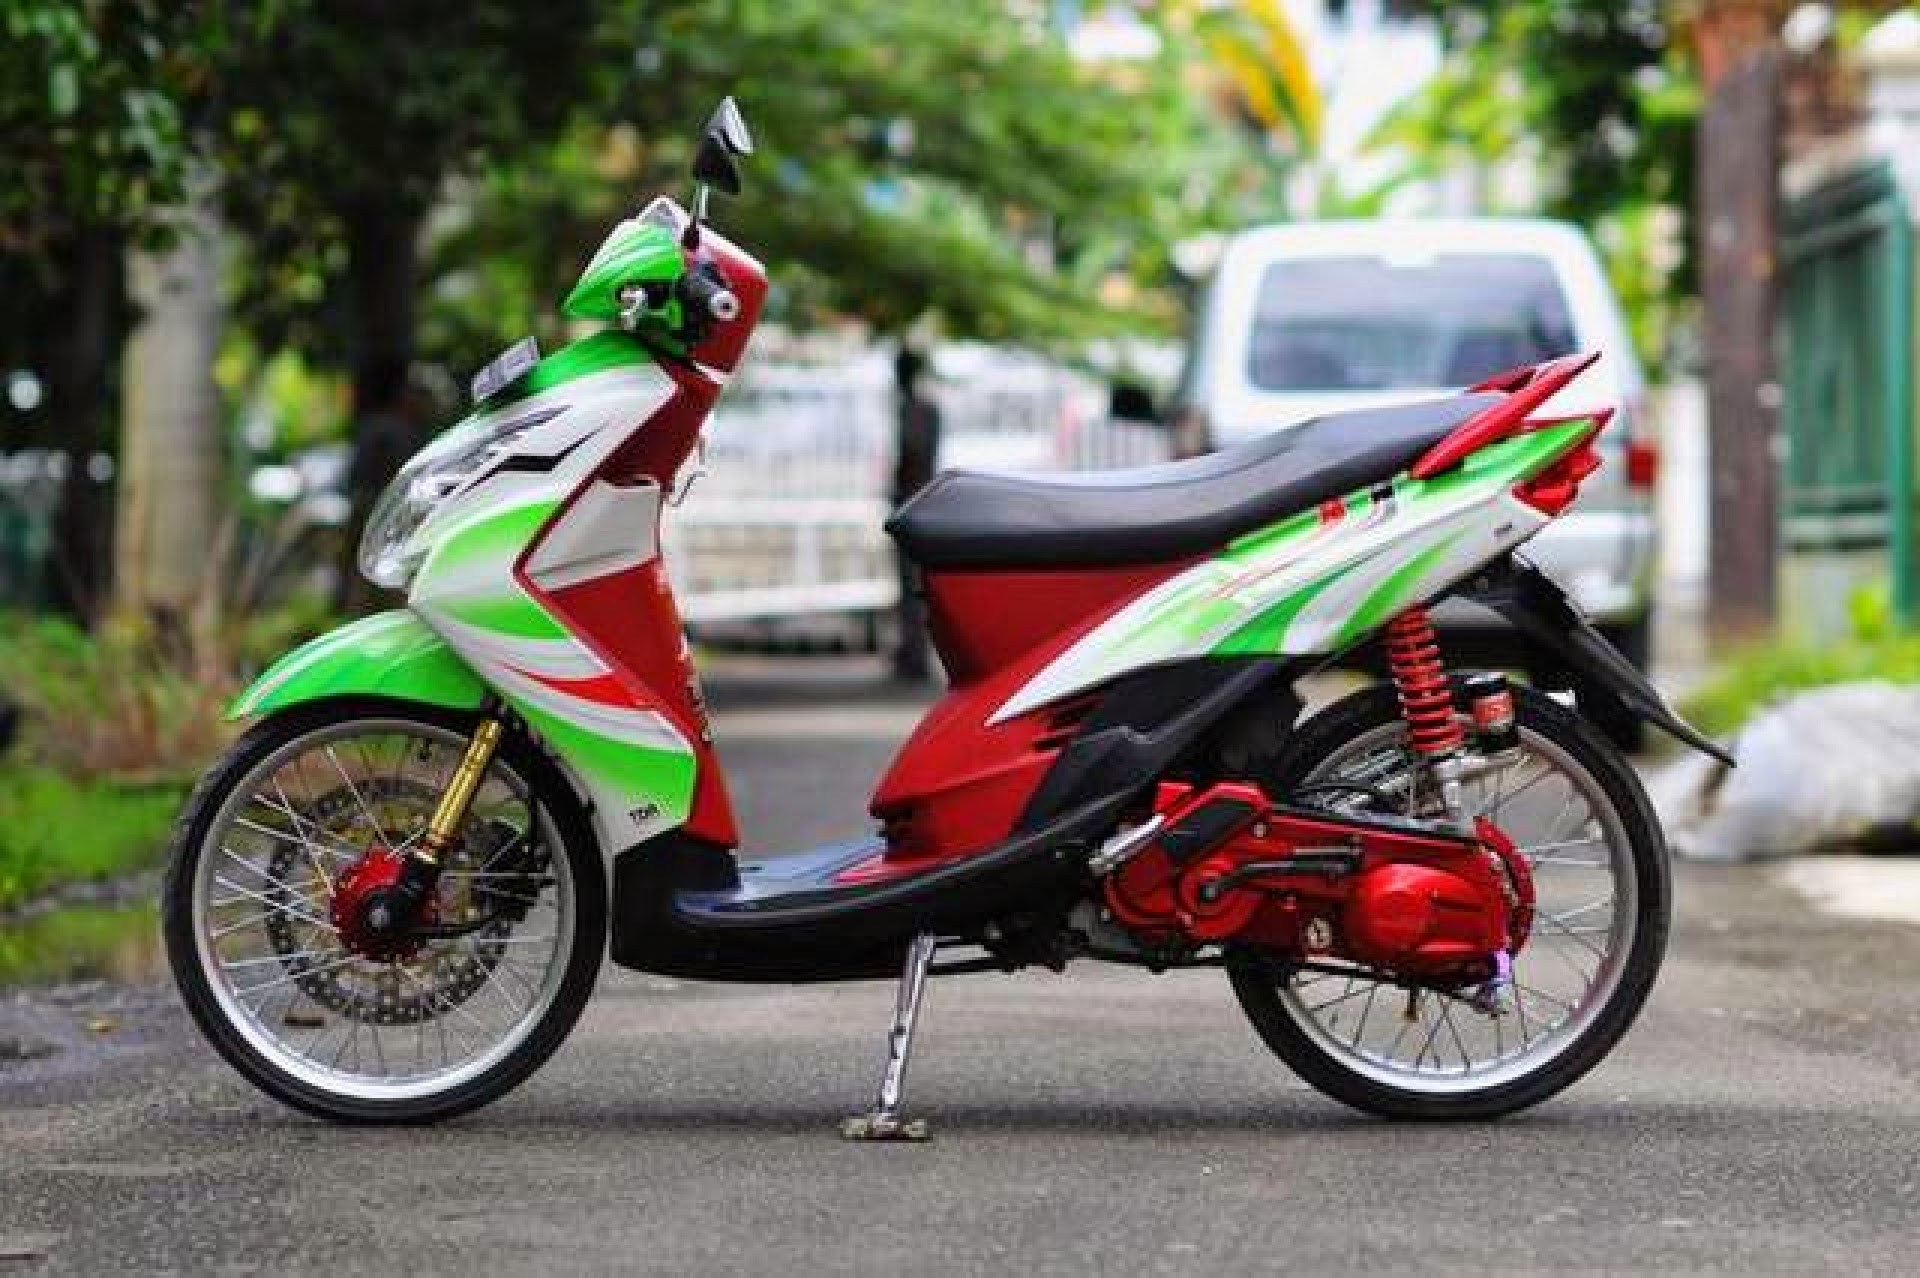 87 Modifikasi Motor Yamaha Mio Fino Sporty Terlengkap Kinyis Motor